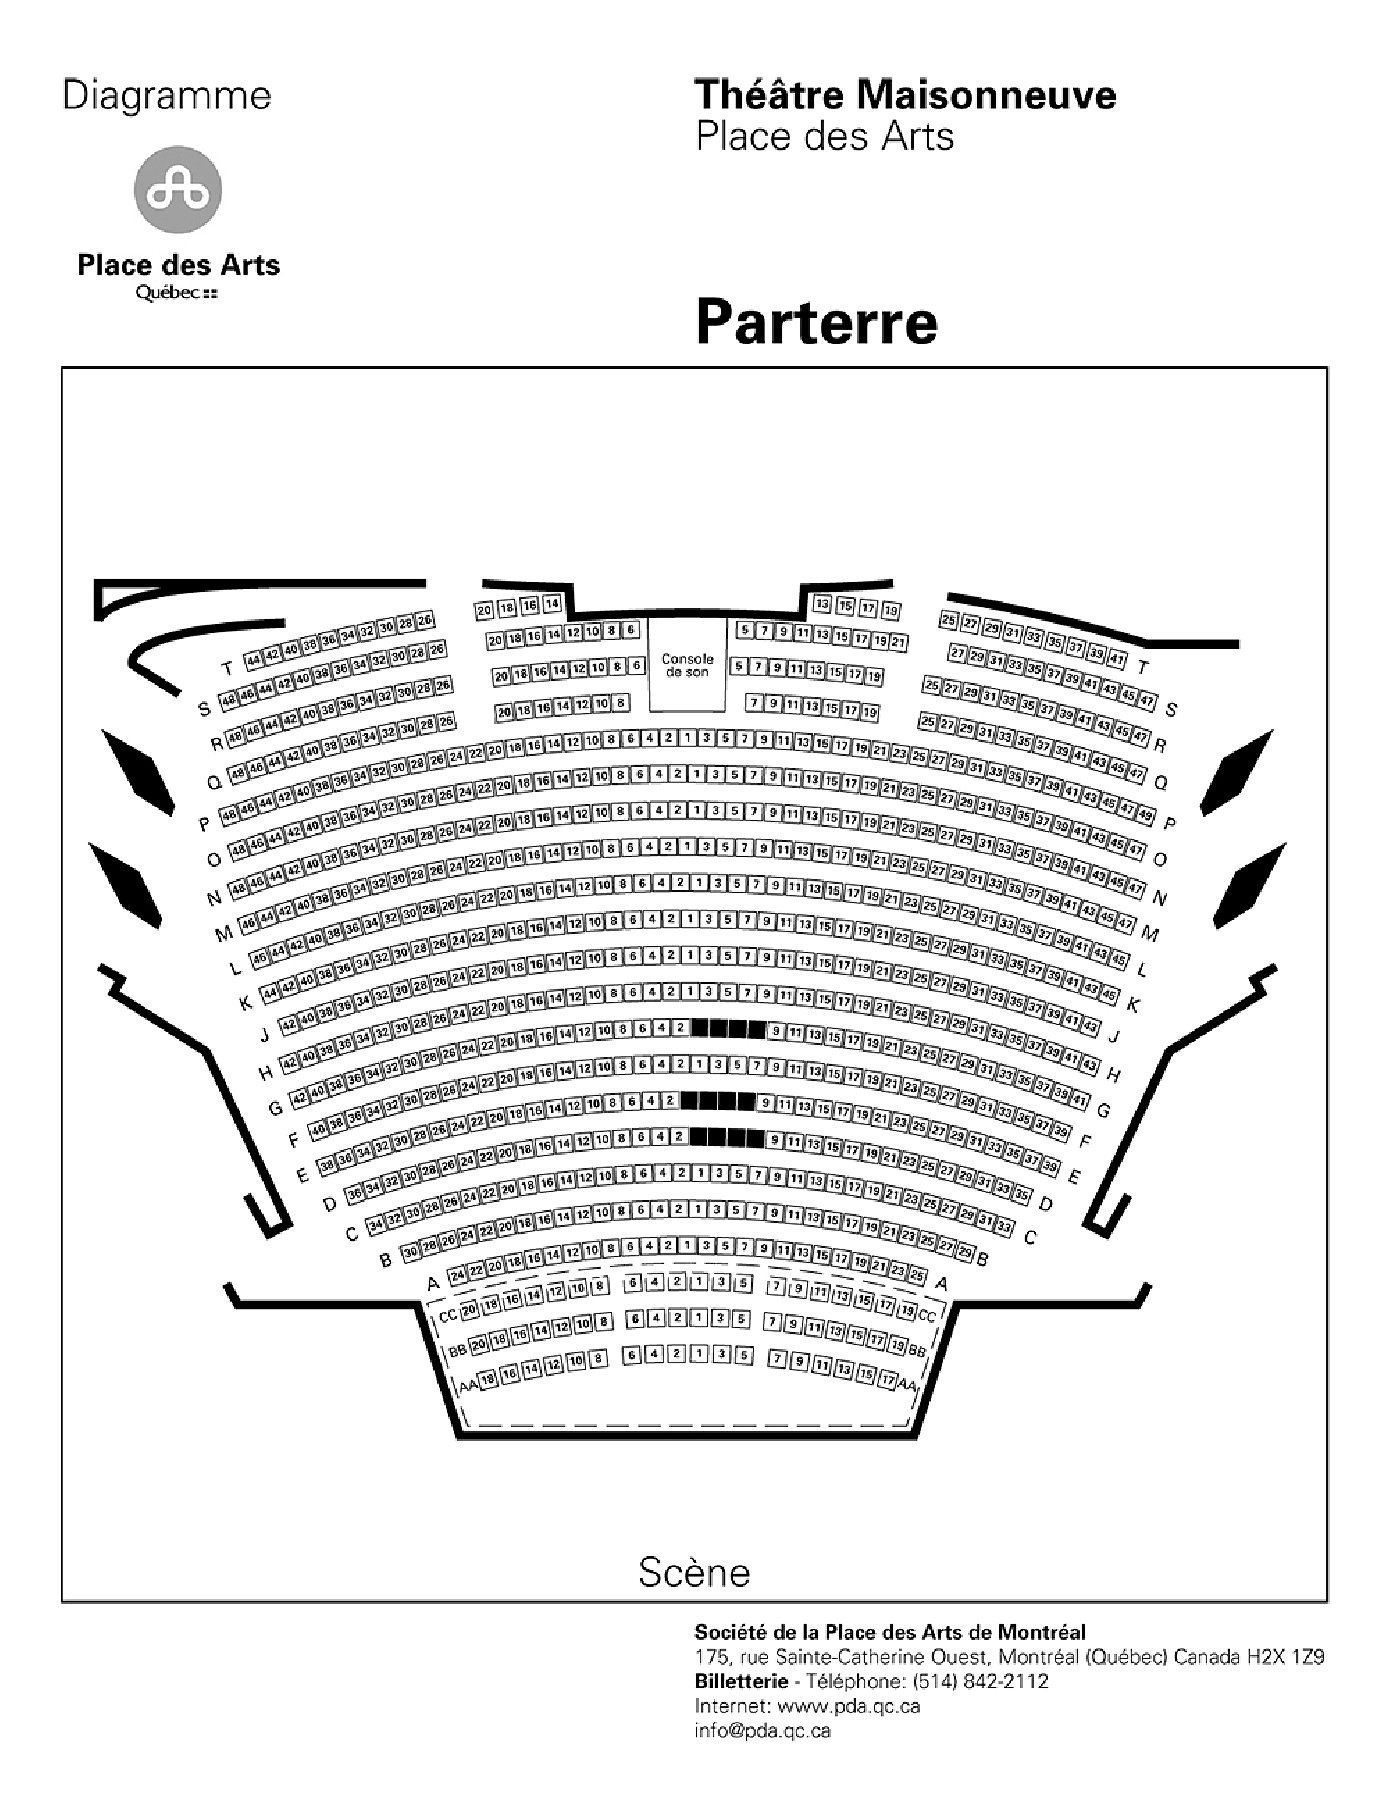 Theatre Maisonneuve Montreal Seating Chart